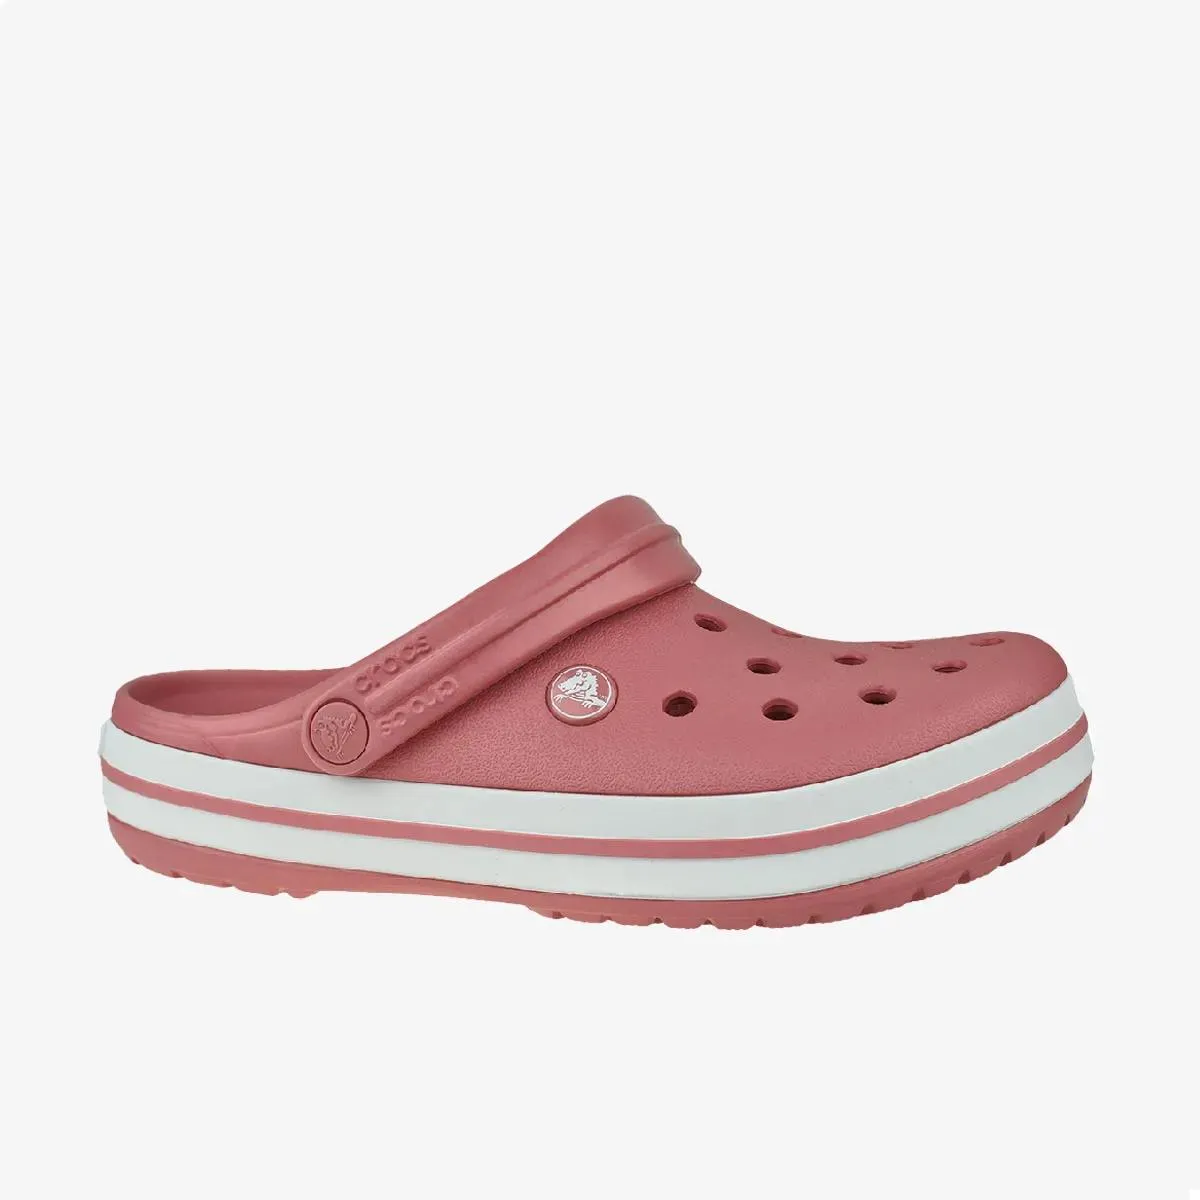 Crocs Sandale CROCBAND BLOSSOM/WHITE 